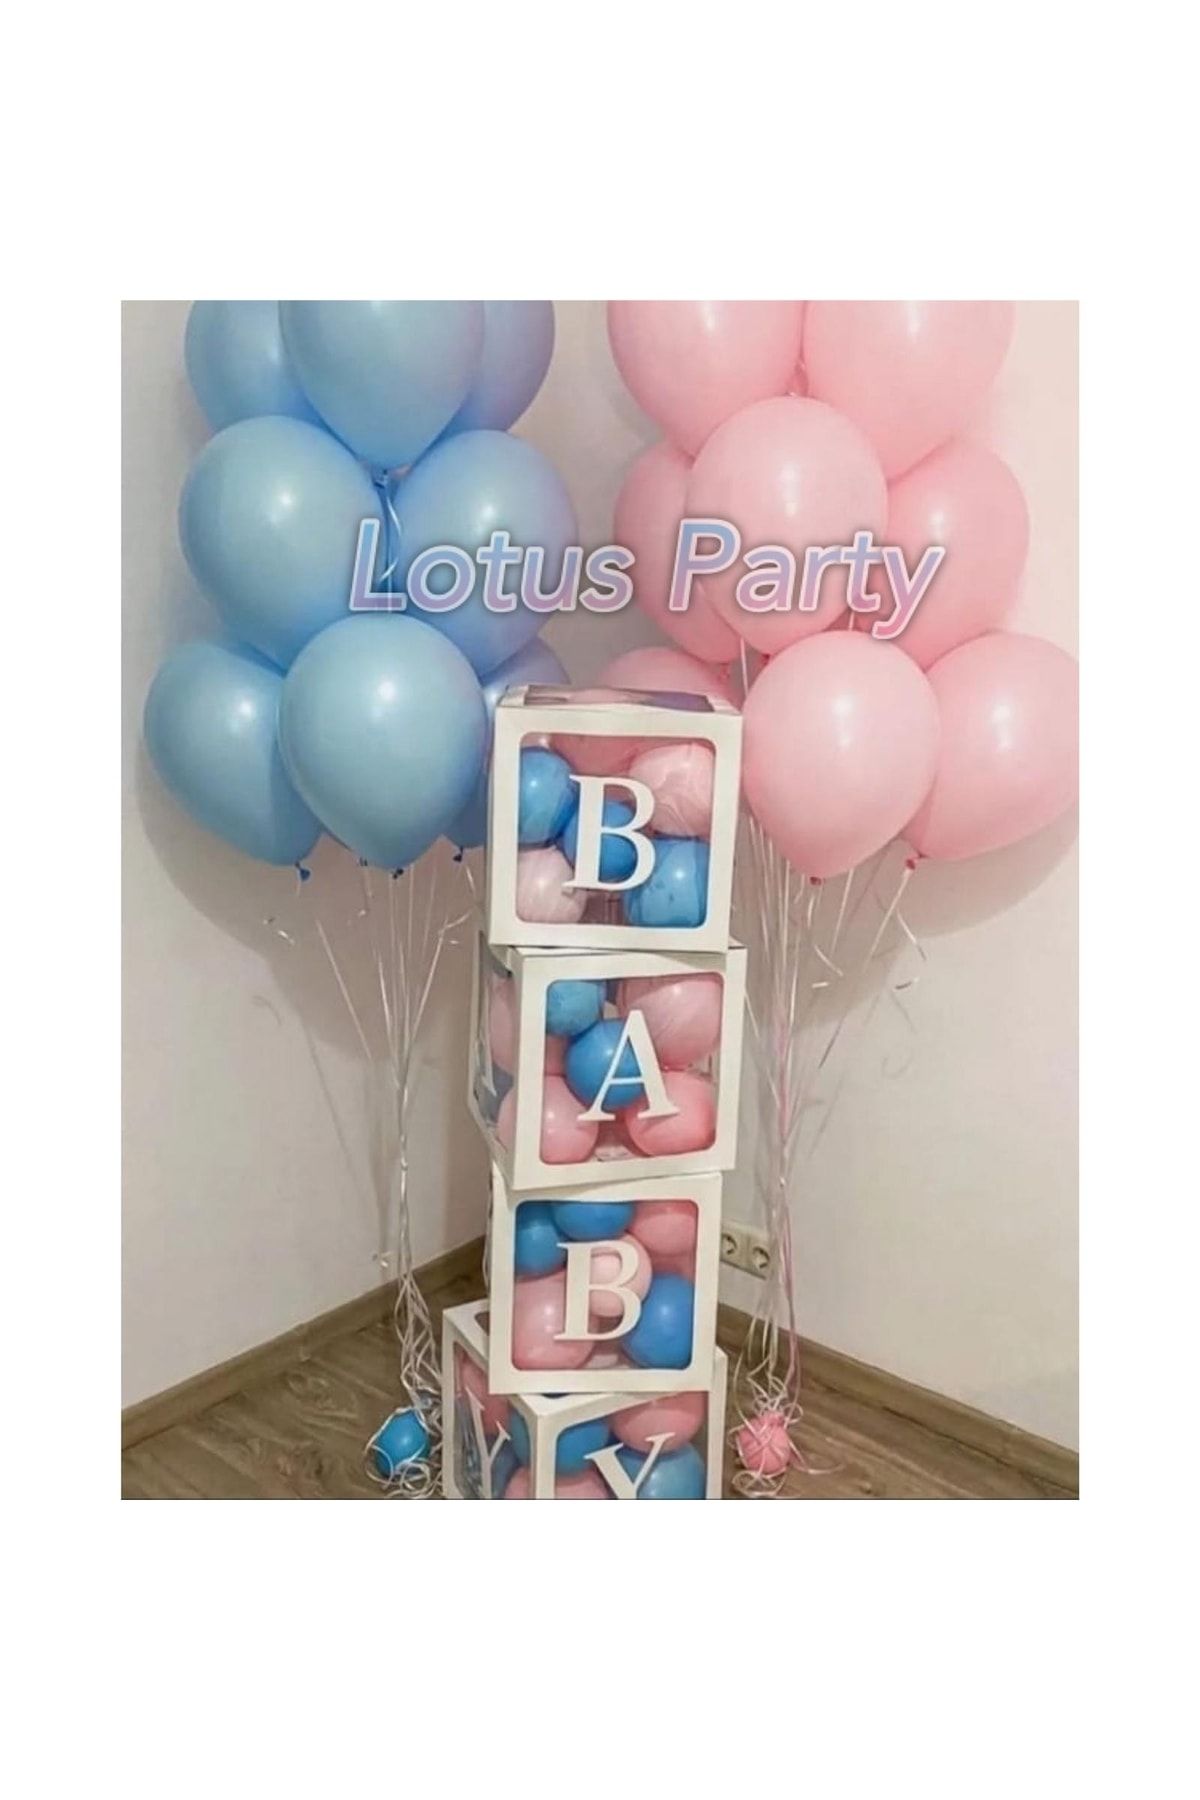 LOTUS PARTY Cinsiyet Partisi Balon Seti 50 Adet - Baby Yazılı Şeffaf Kutu ( Mavi- Pembe Balon )